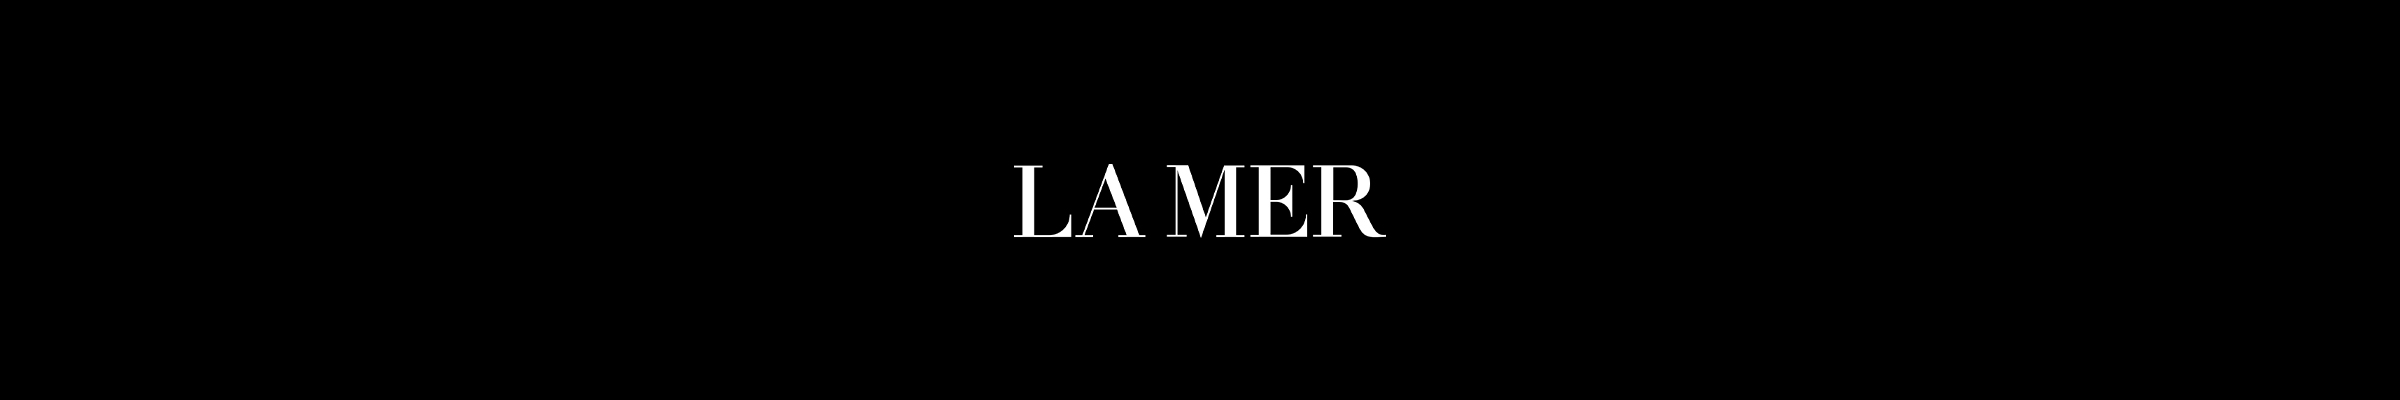 la-mer-banner